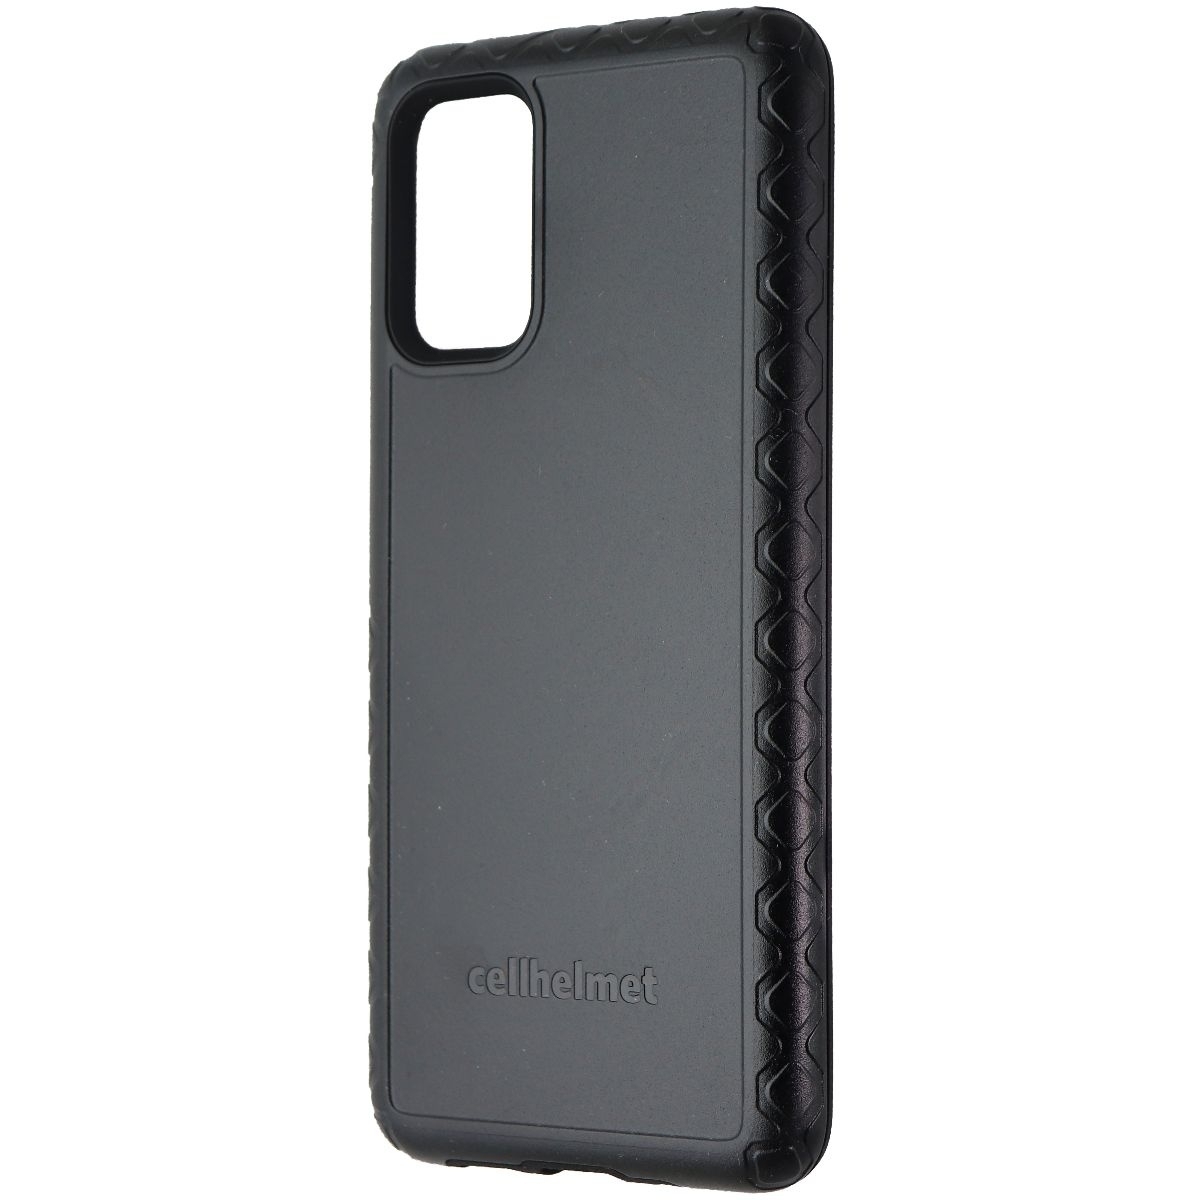 CellHelmet Fortitude Pro Series Case For Samsung Galaxy S20 Plus - Black